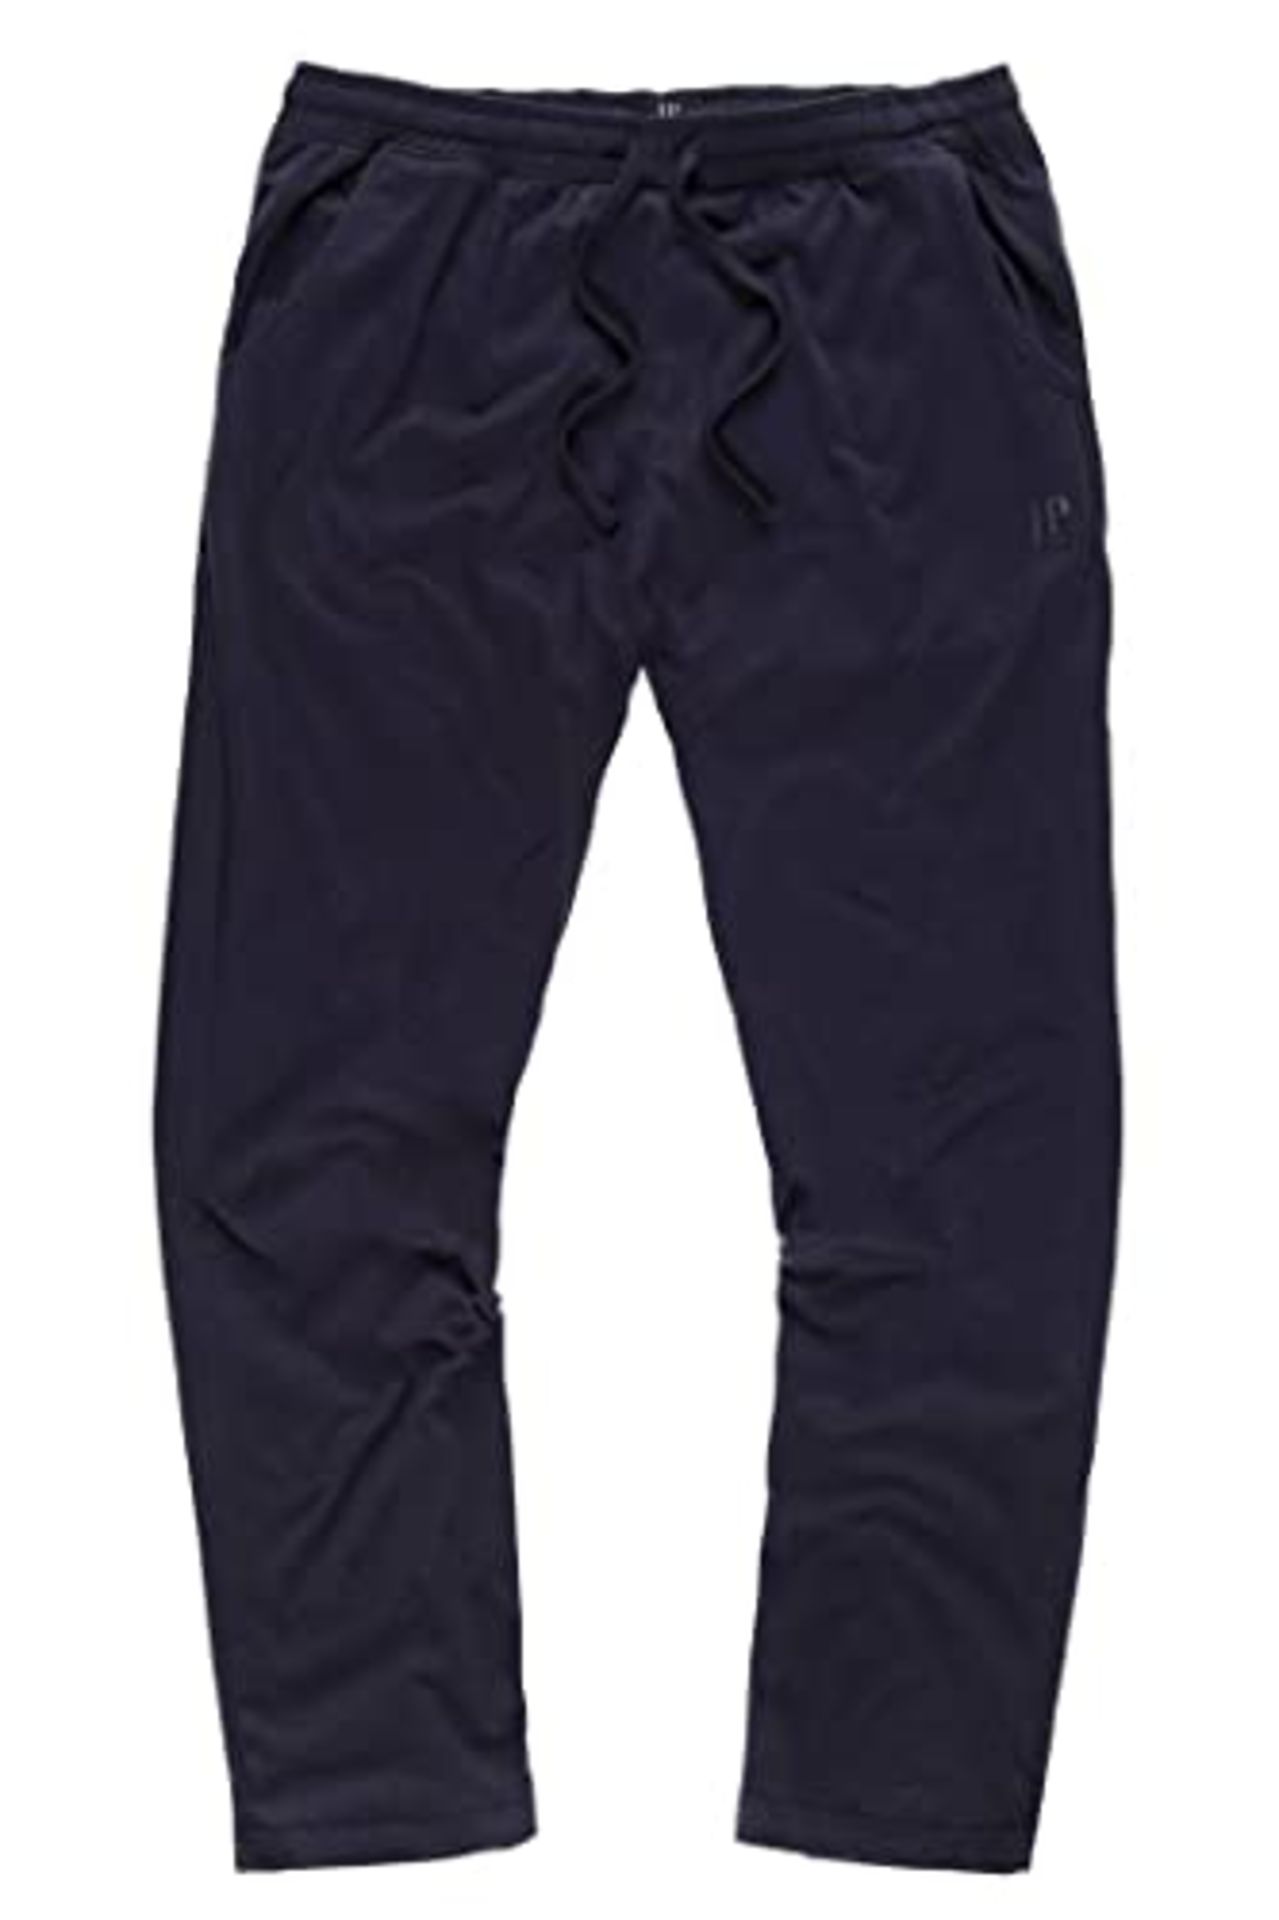 JP 1880 Pure Cotton Navy Blue Pyjama Trousers 4XL 708406 76-4XL